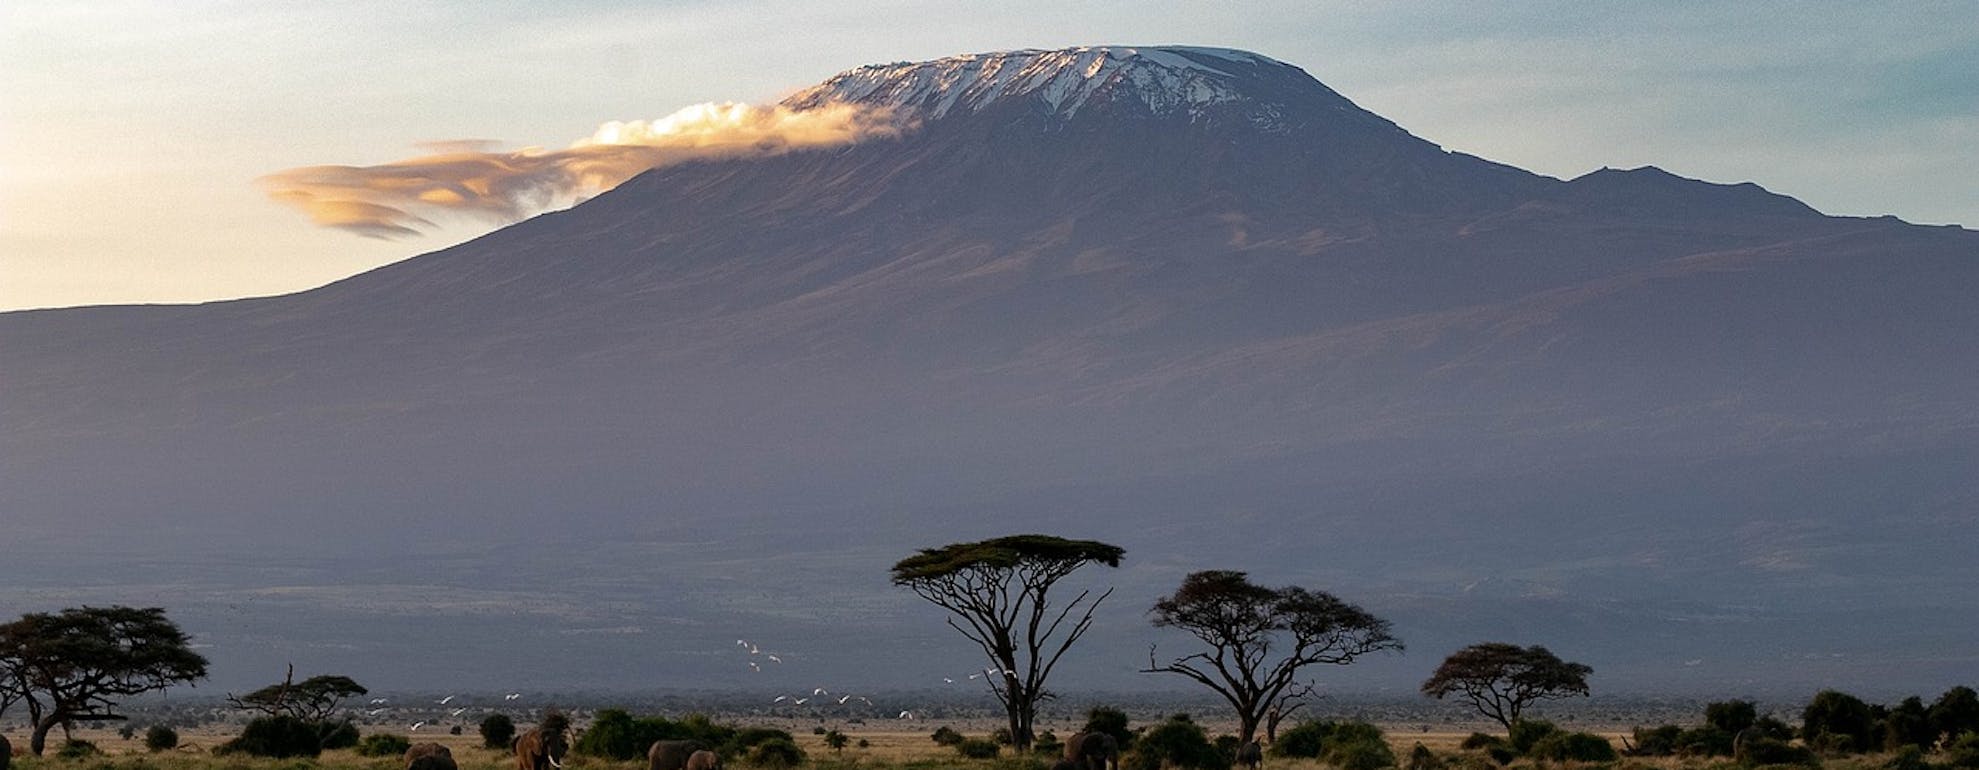 Guía de trekking - Subida al Kilimanjaro